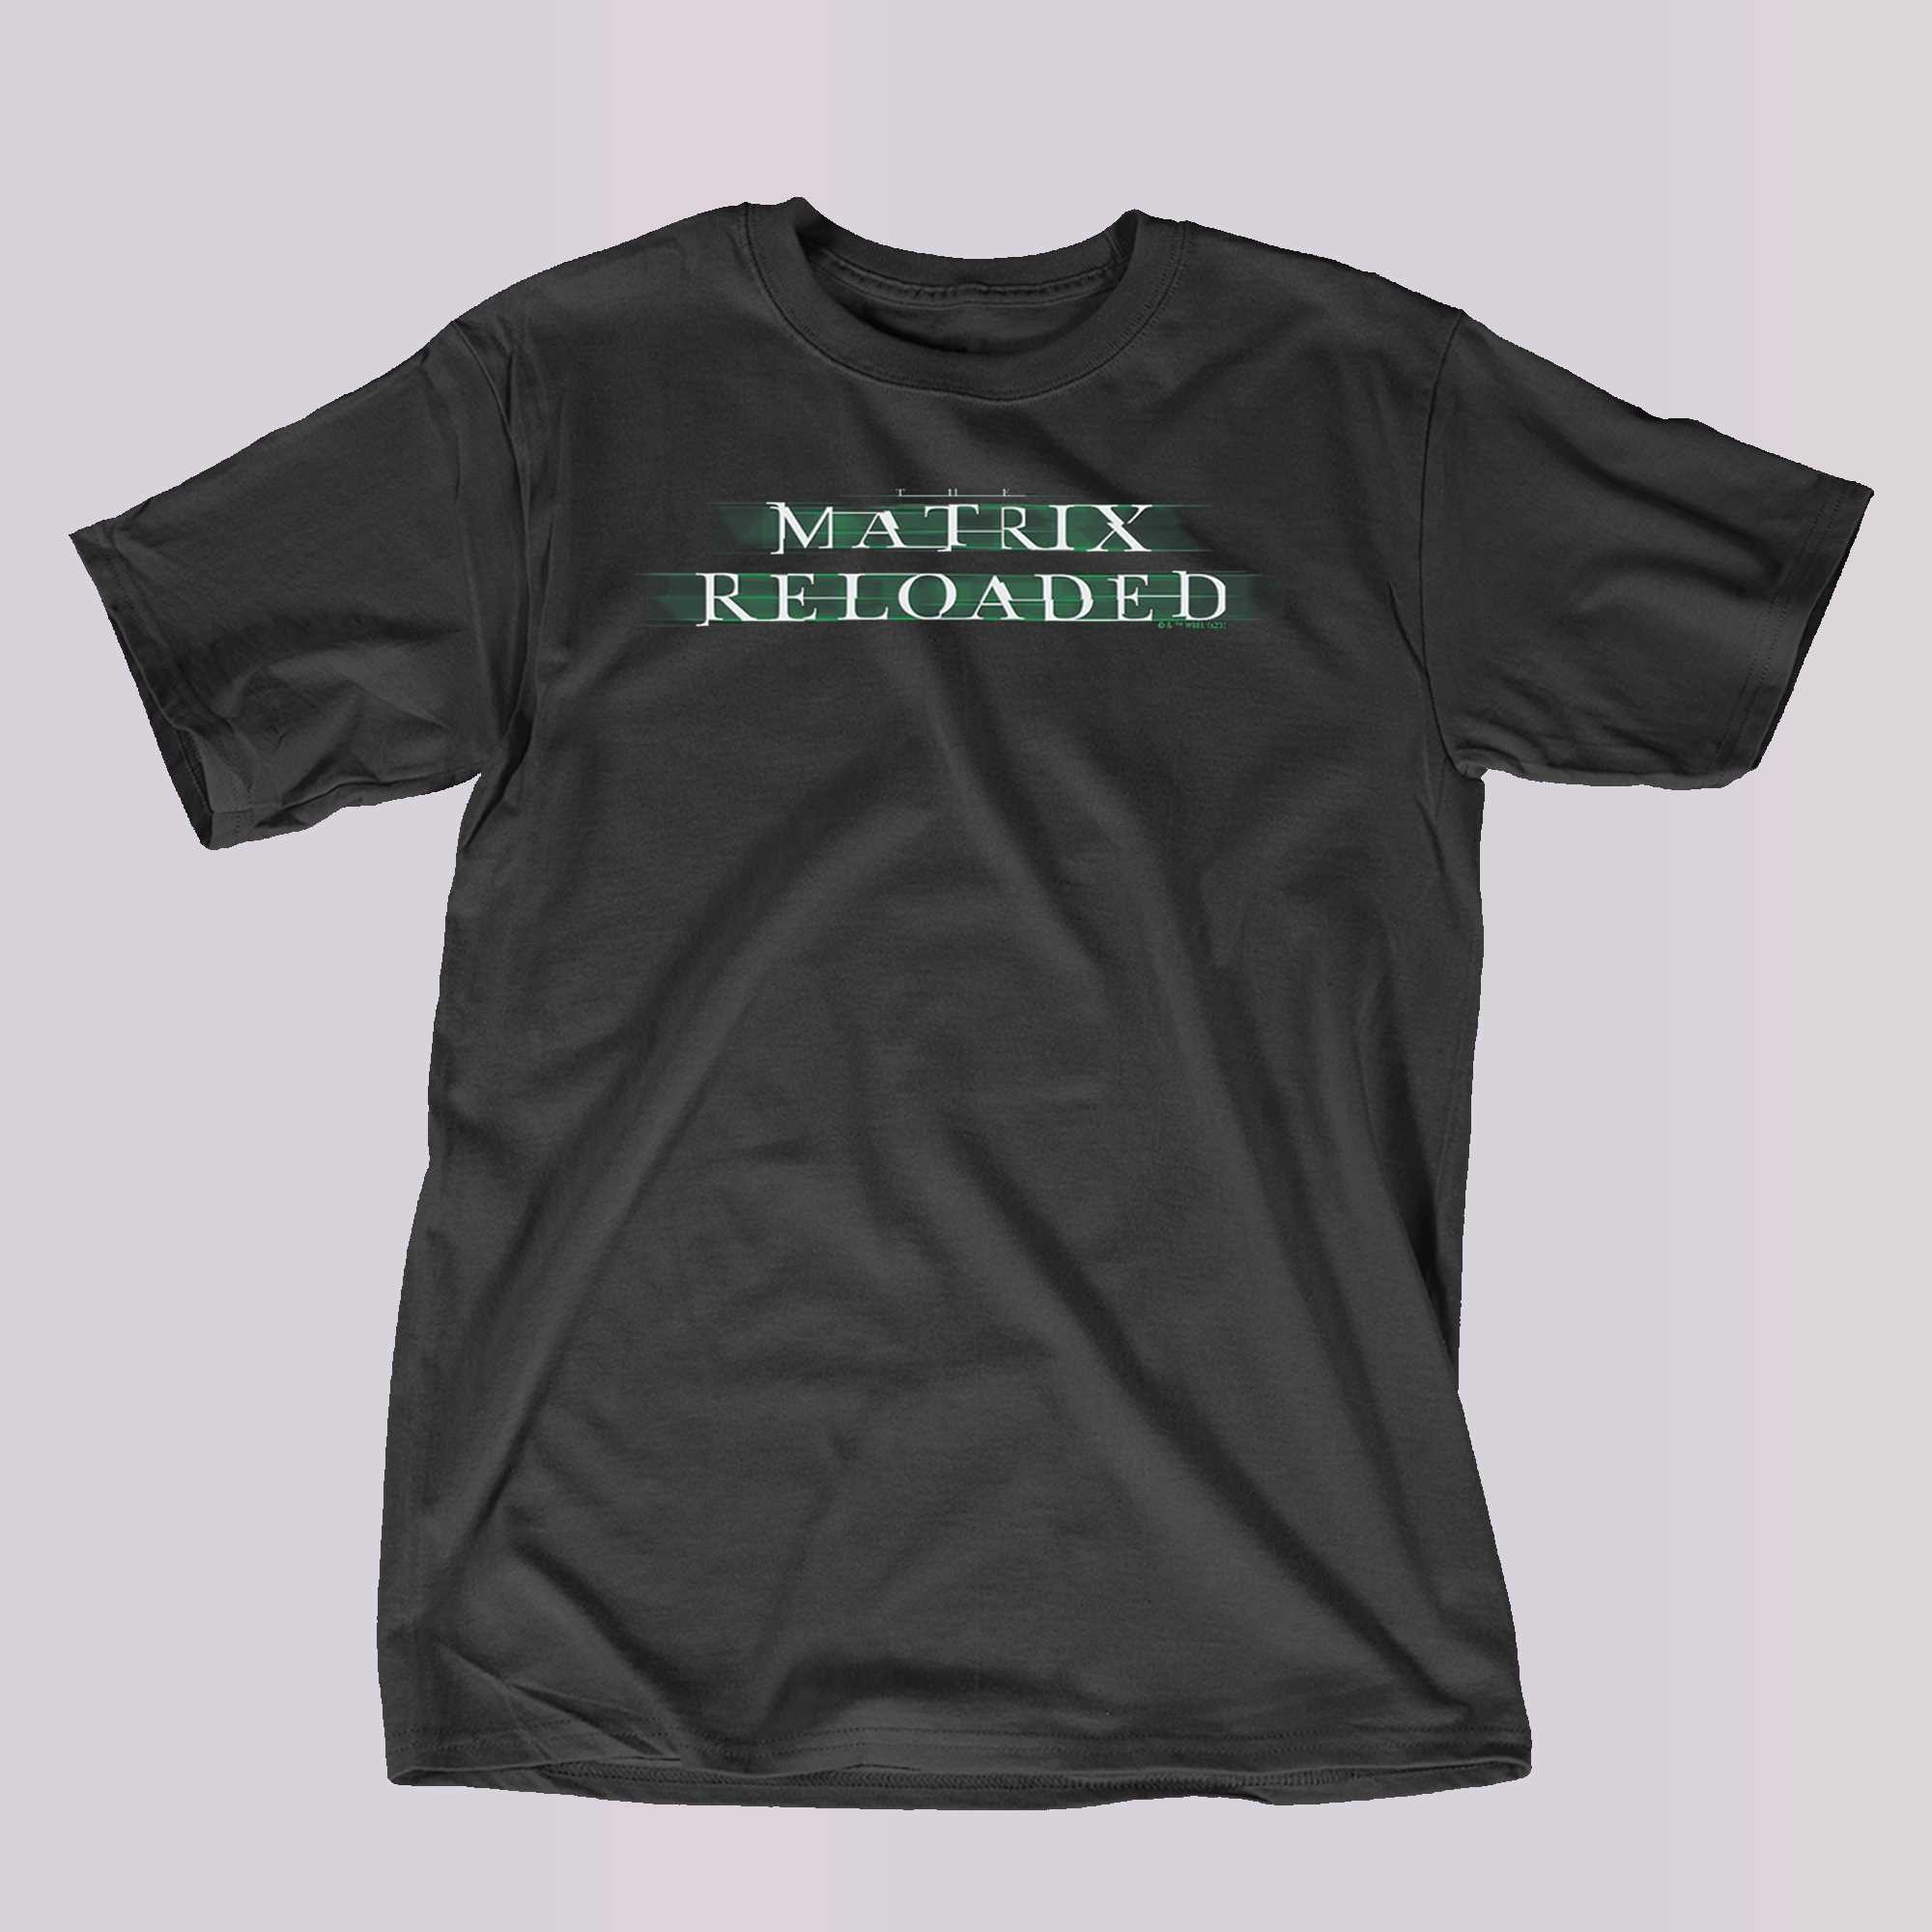 The Matrix Reloaded T-shirt